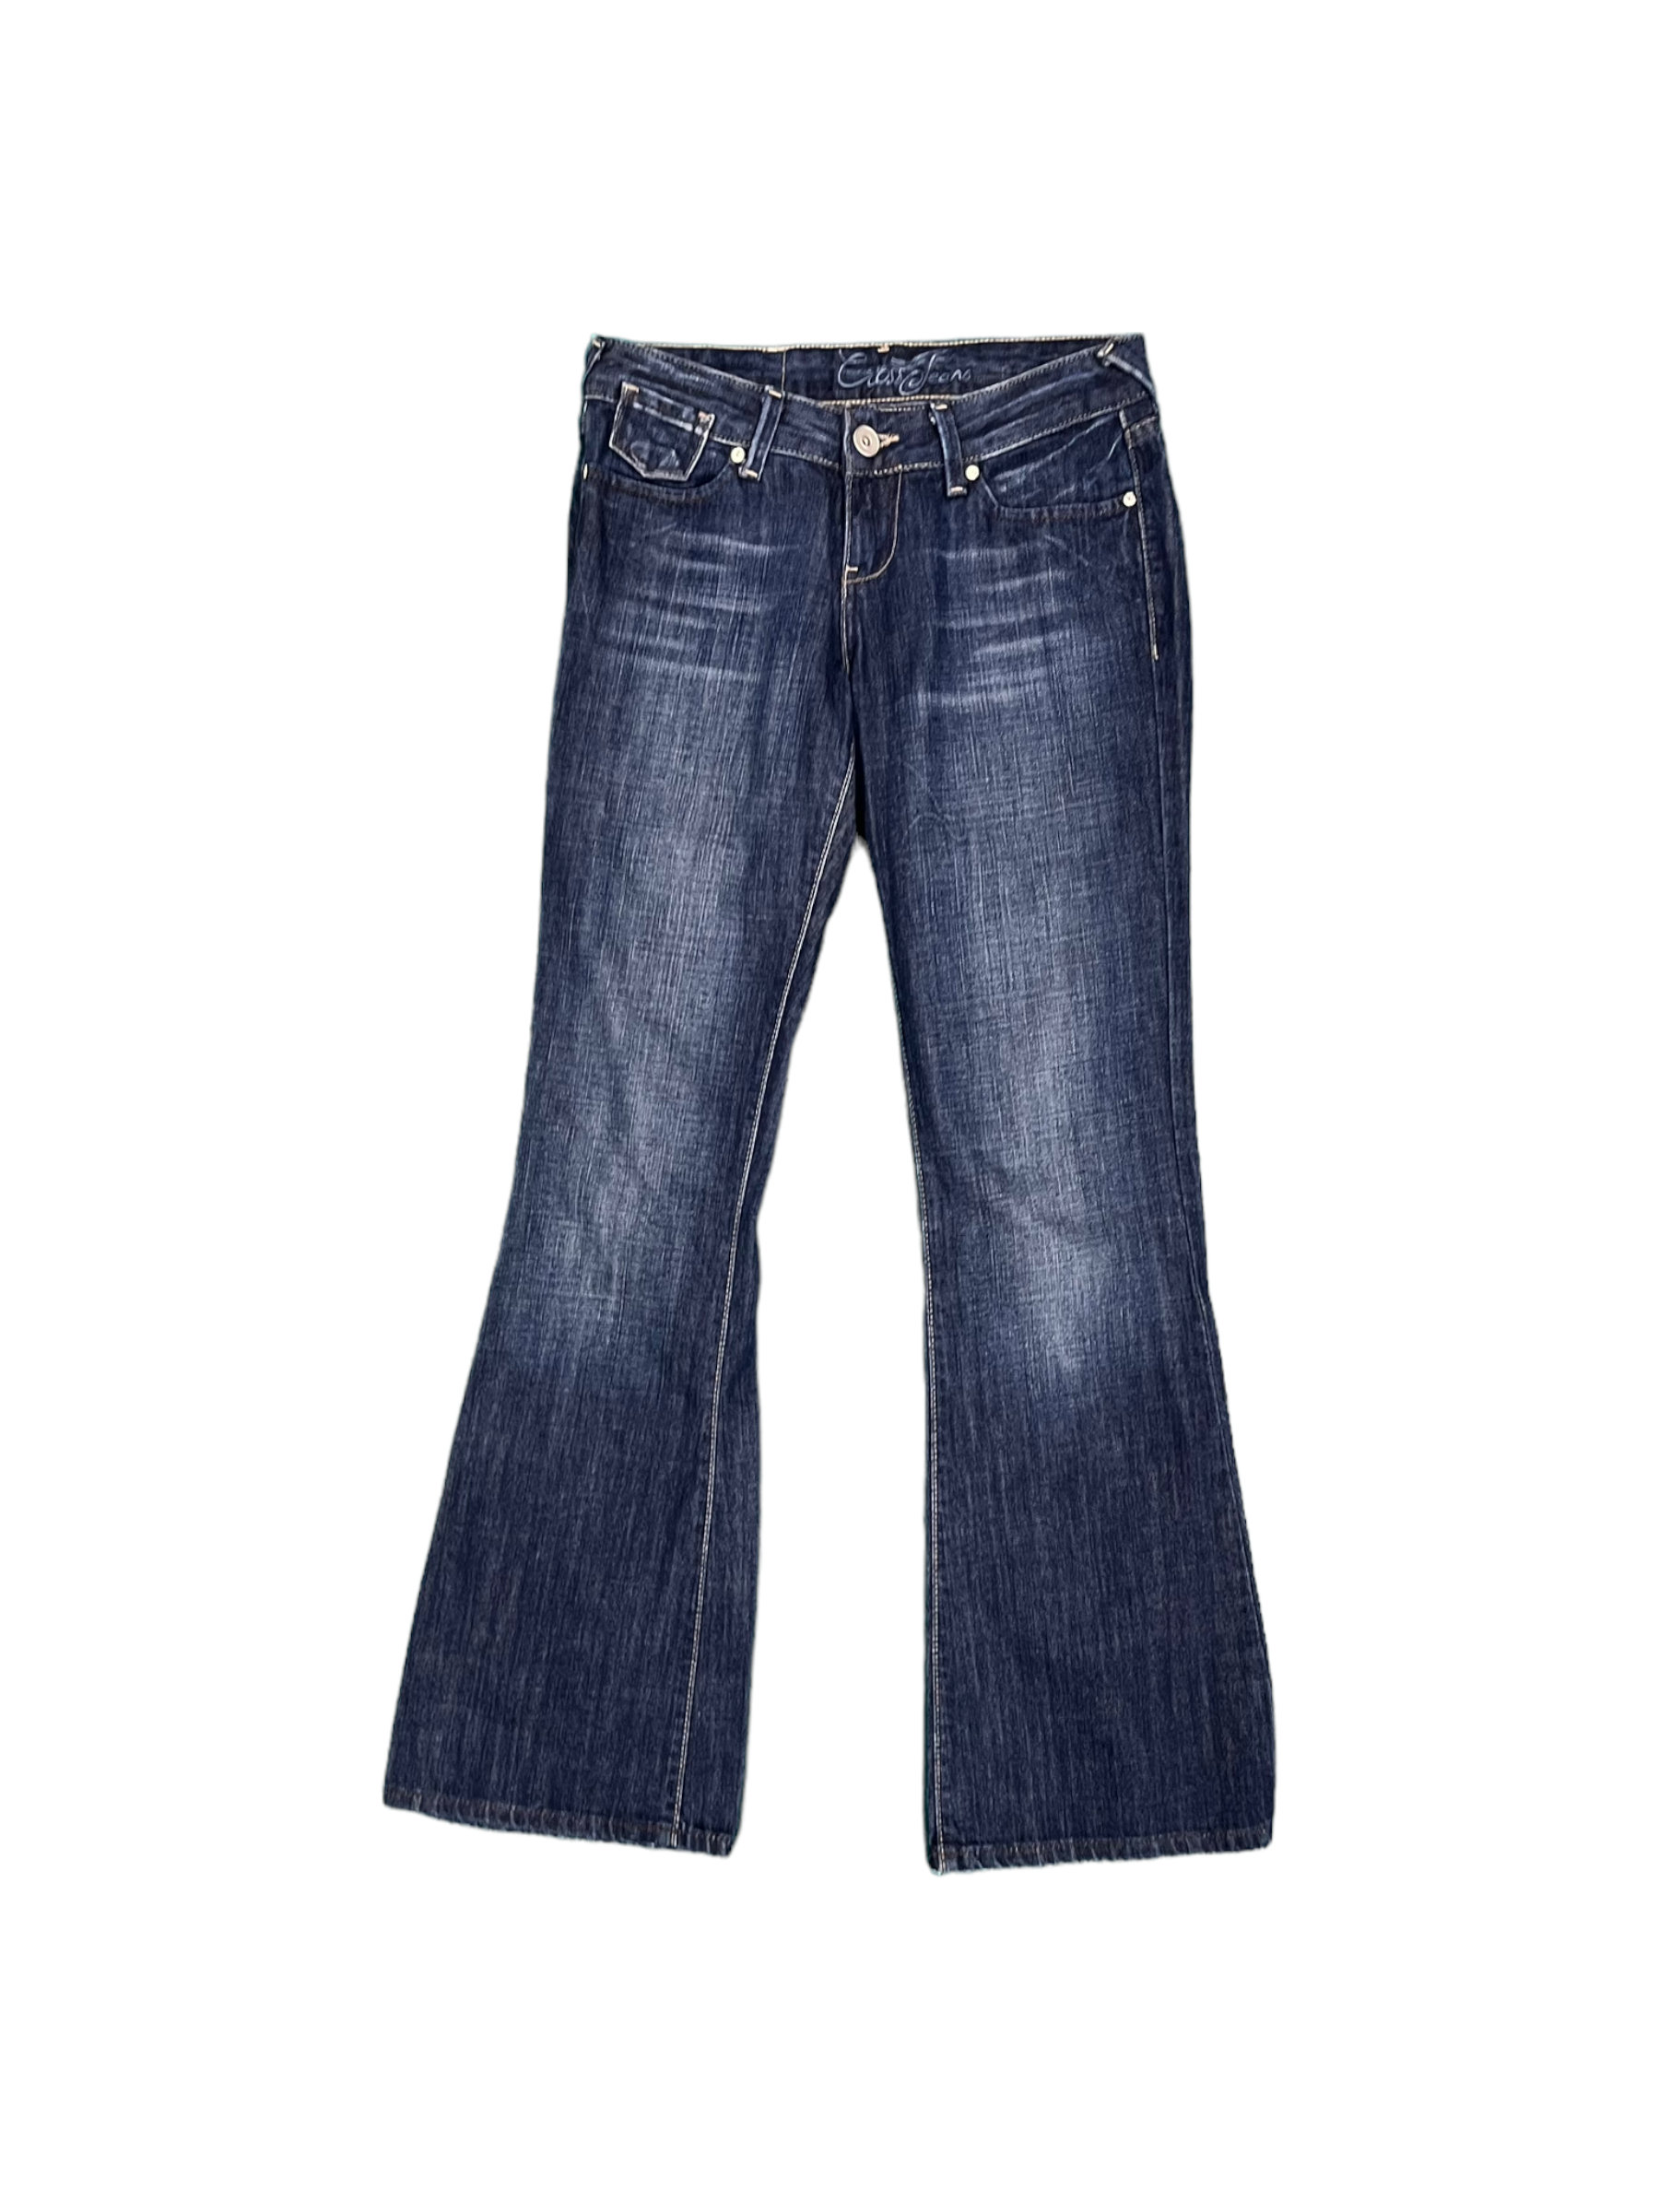 Womens Flared Vintage Jeans - Waist 28" Length 32"